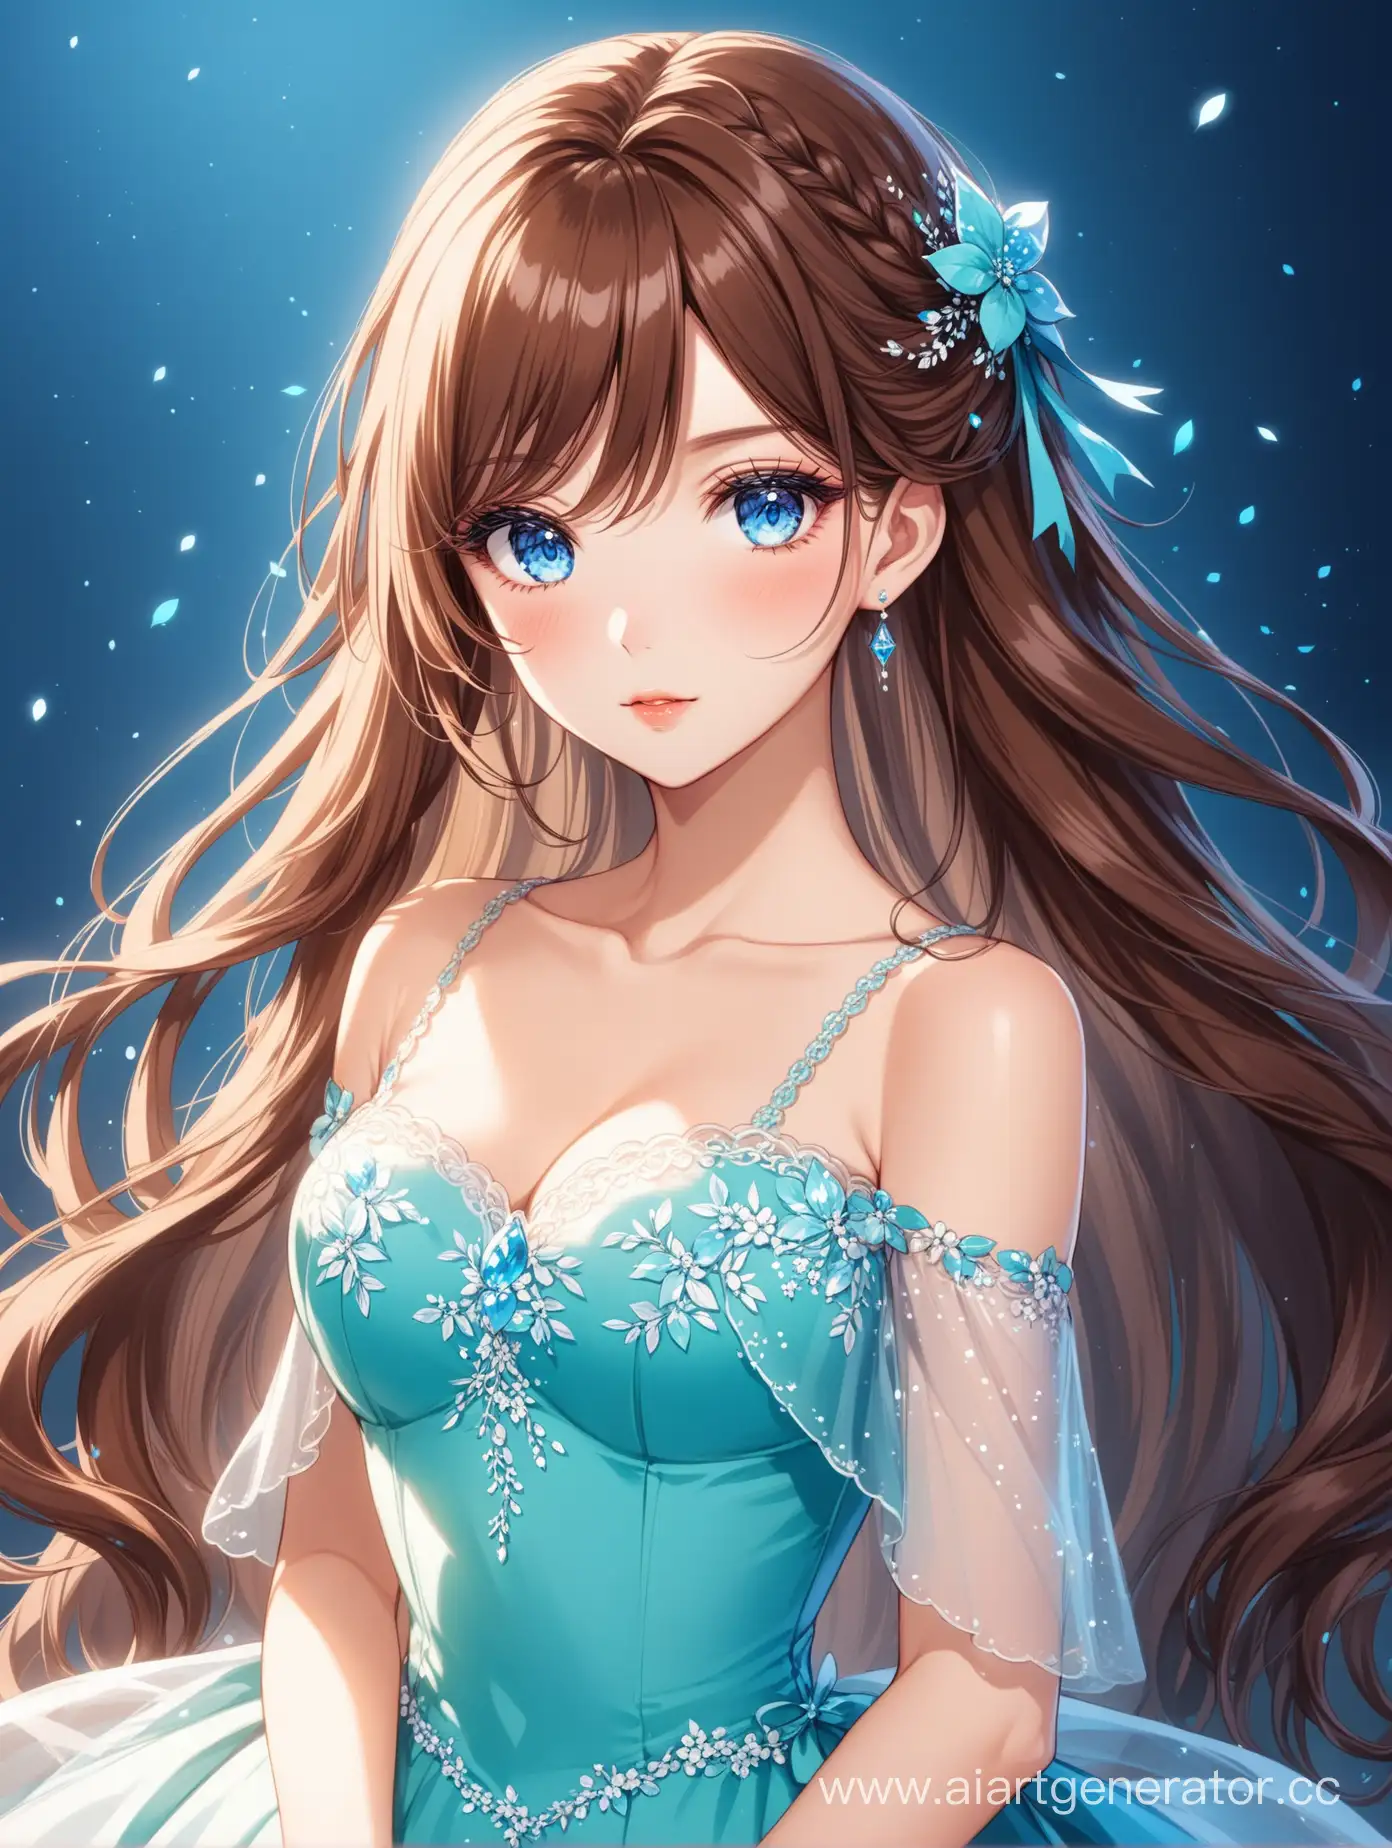 Elegant-Anime-Girl-Portrait-with-Blue-Eyes-and-Chestnut-Hair